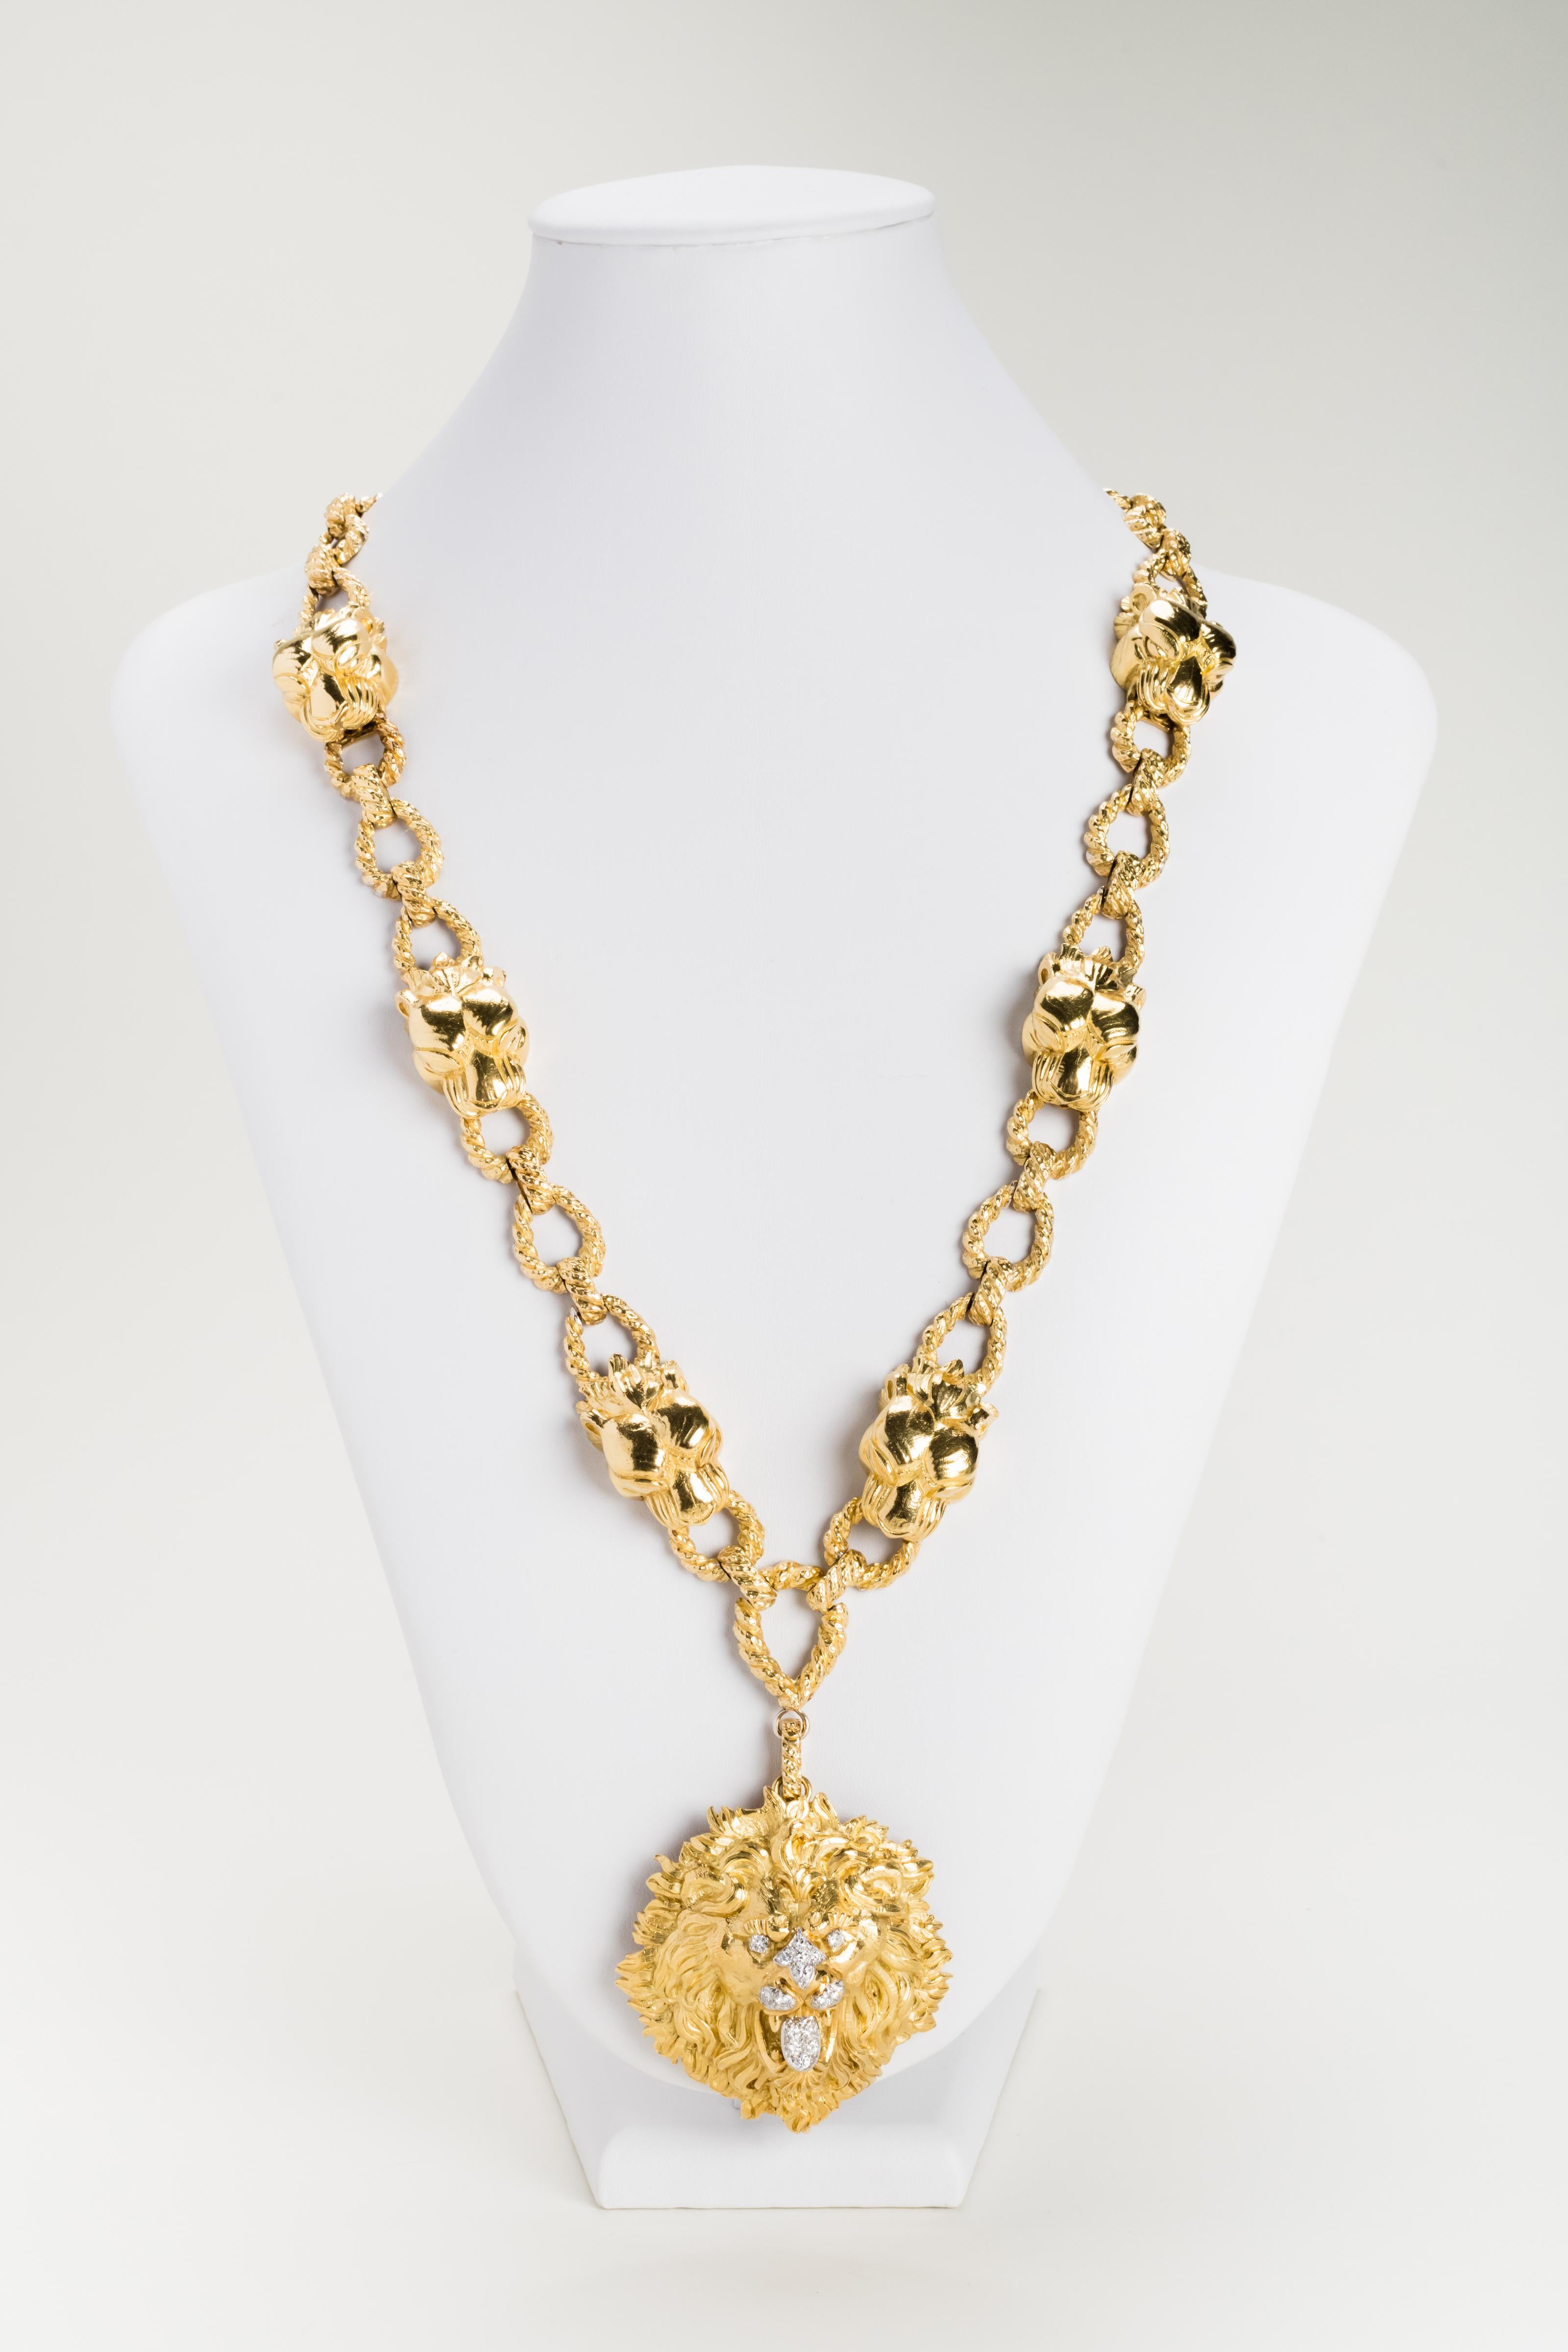 David Webb 18 Karat Gold Necklace with Lion Head Pendant, circa 1965 2